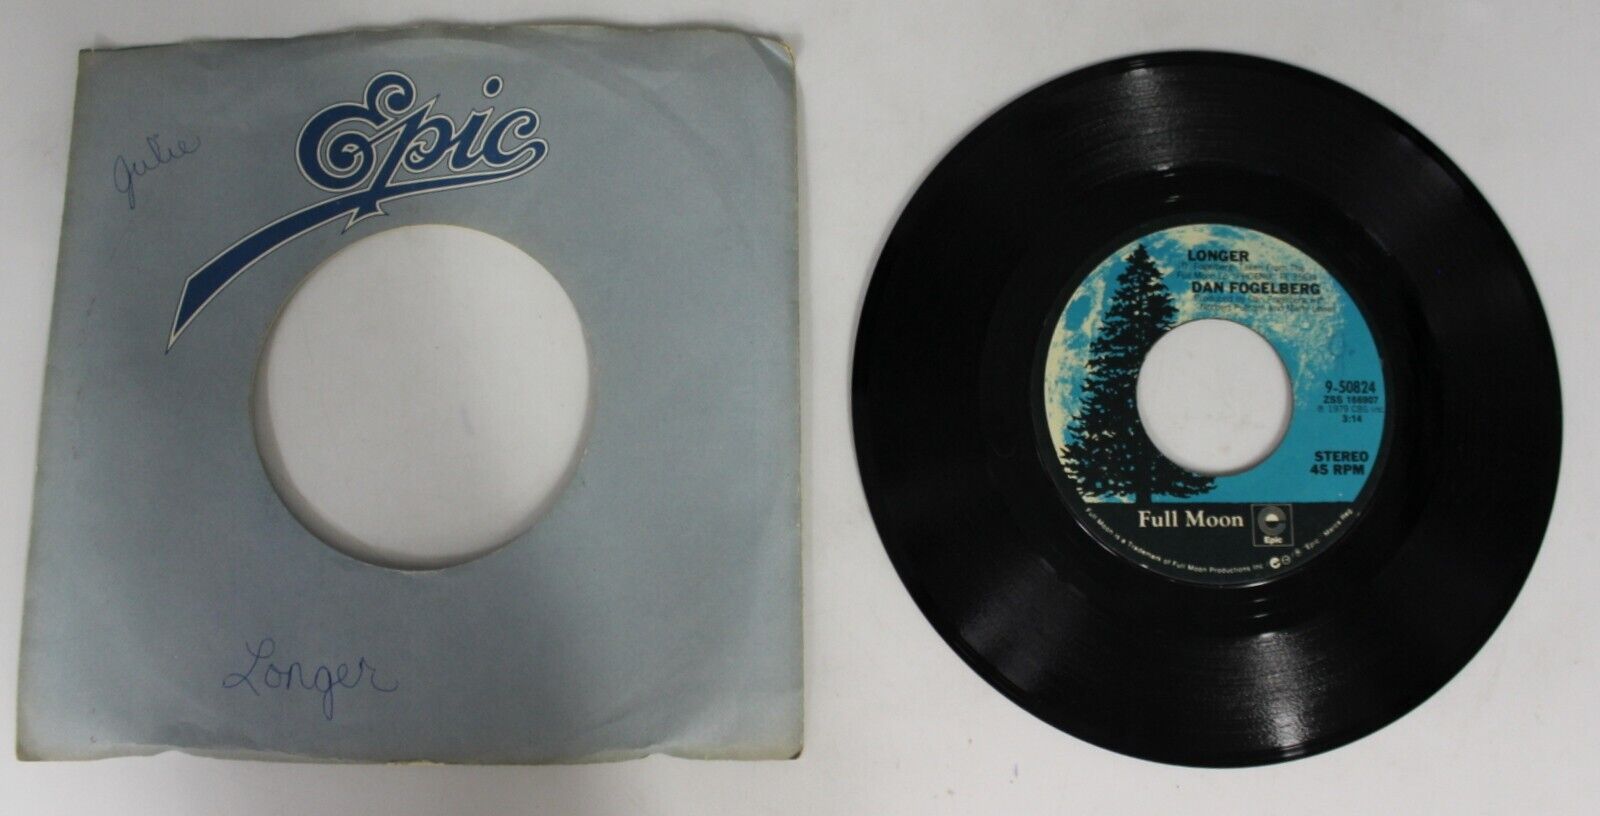 Dan Fogelberg Longer Along The Road 7" 45 RPM Vinyl 1979 Epic Records Folk